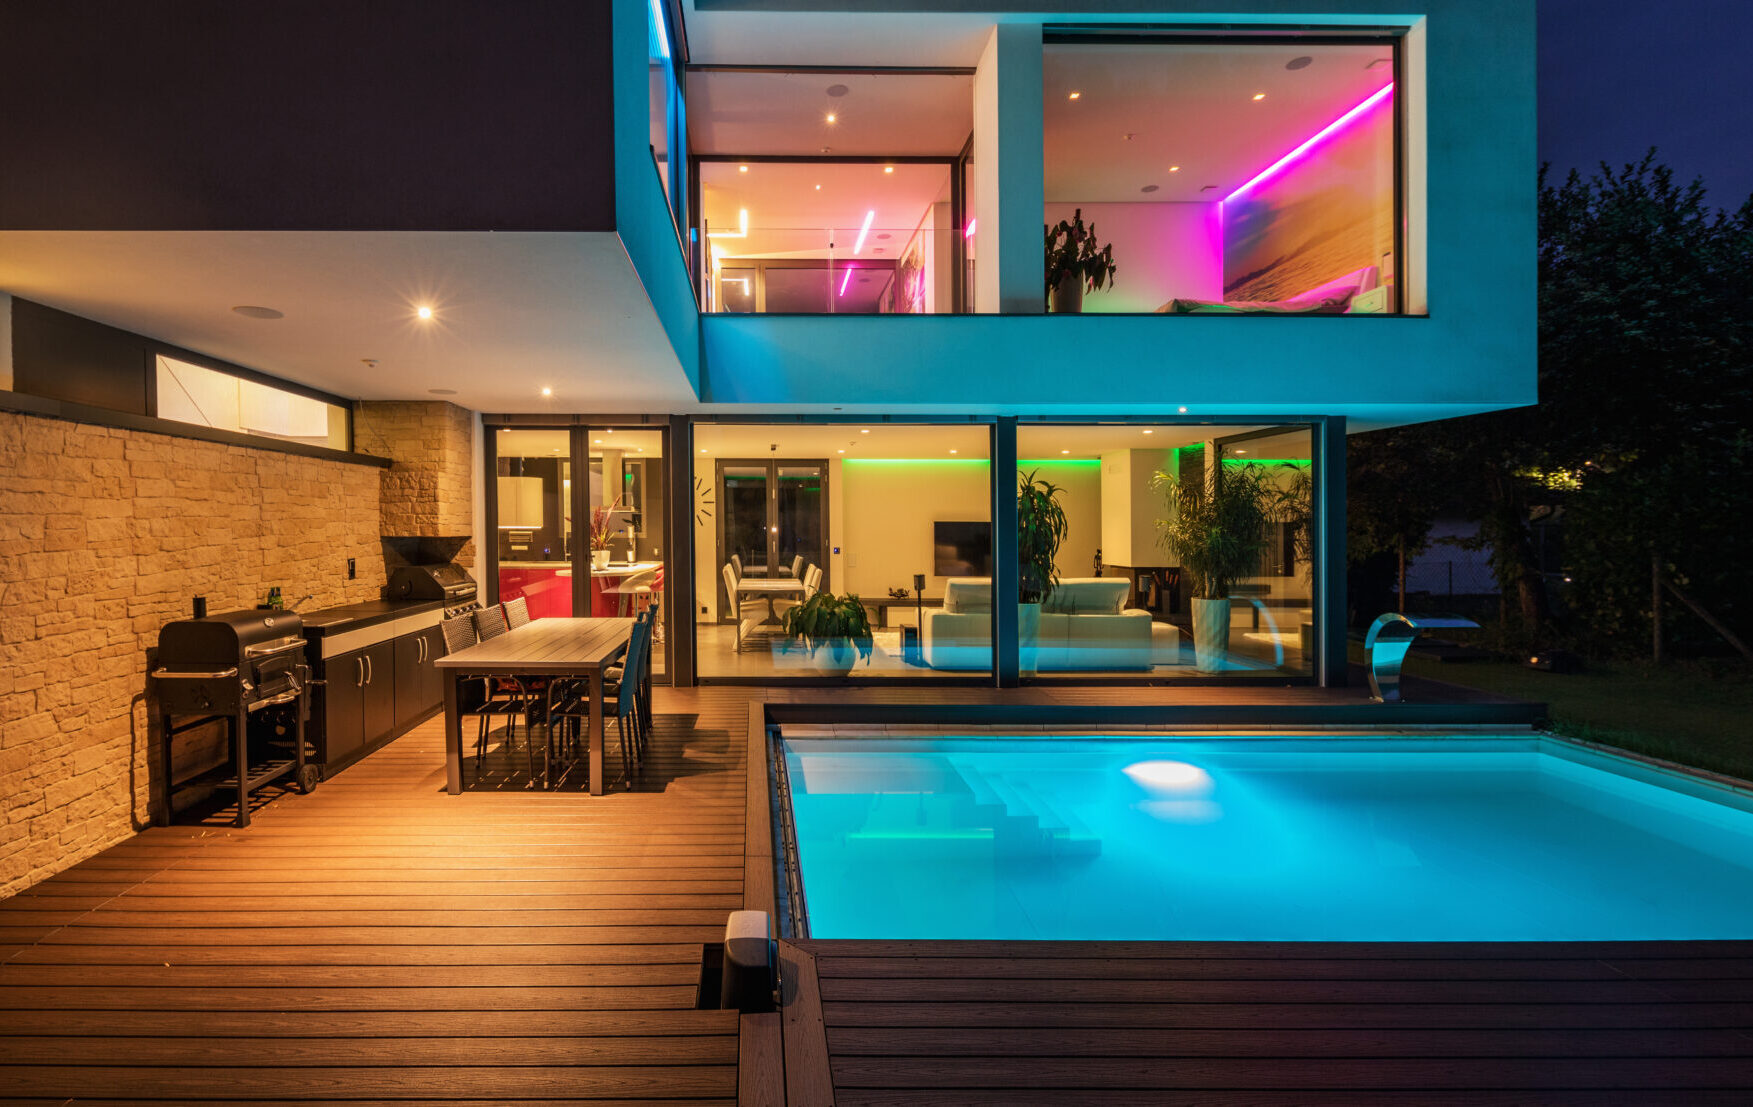 Home outdoor custom Lighting and surround sound system around pool